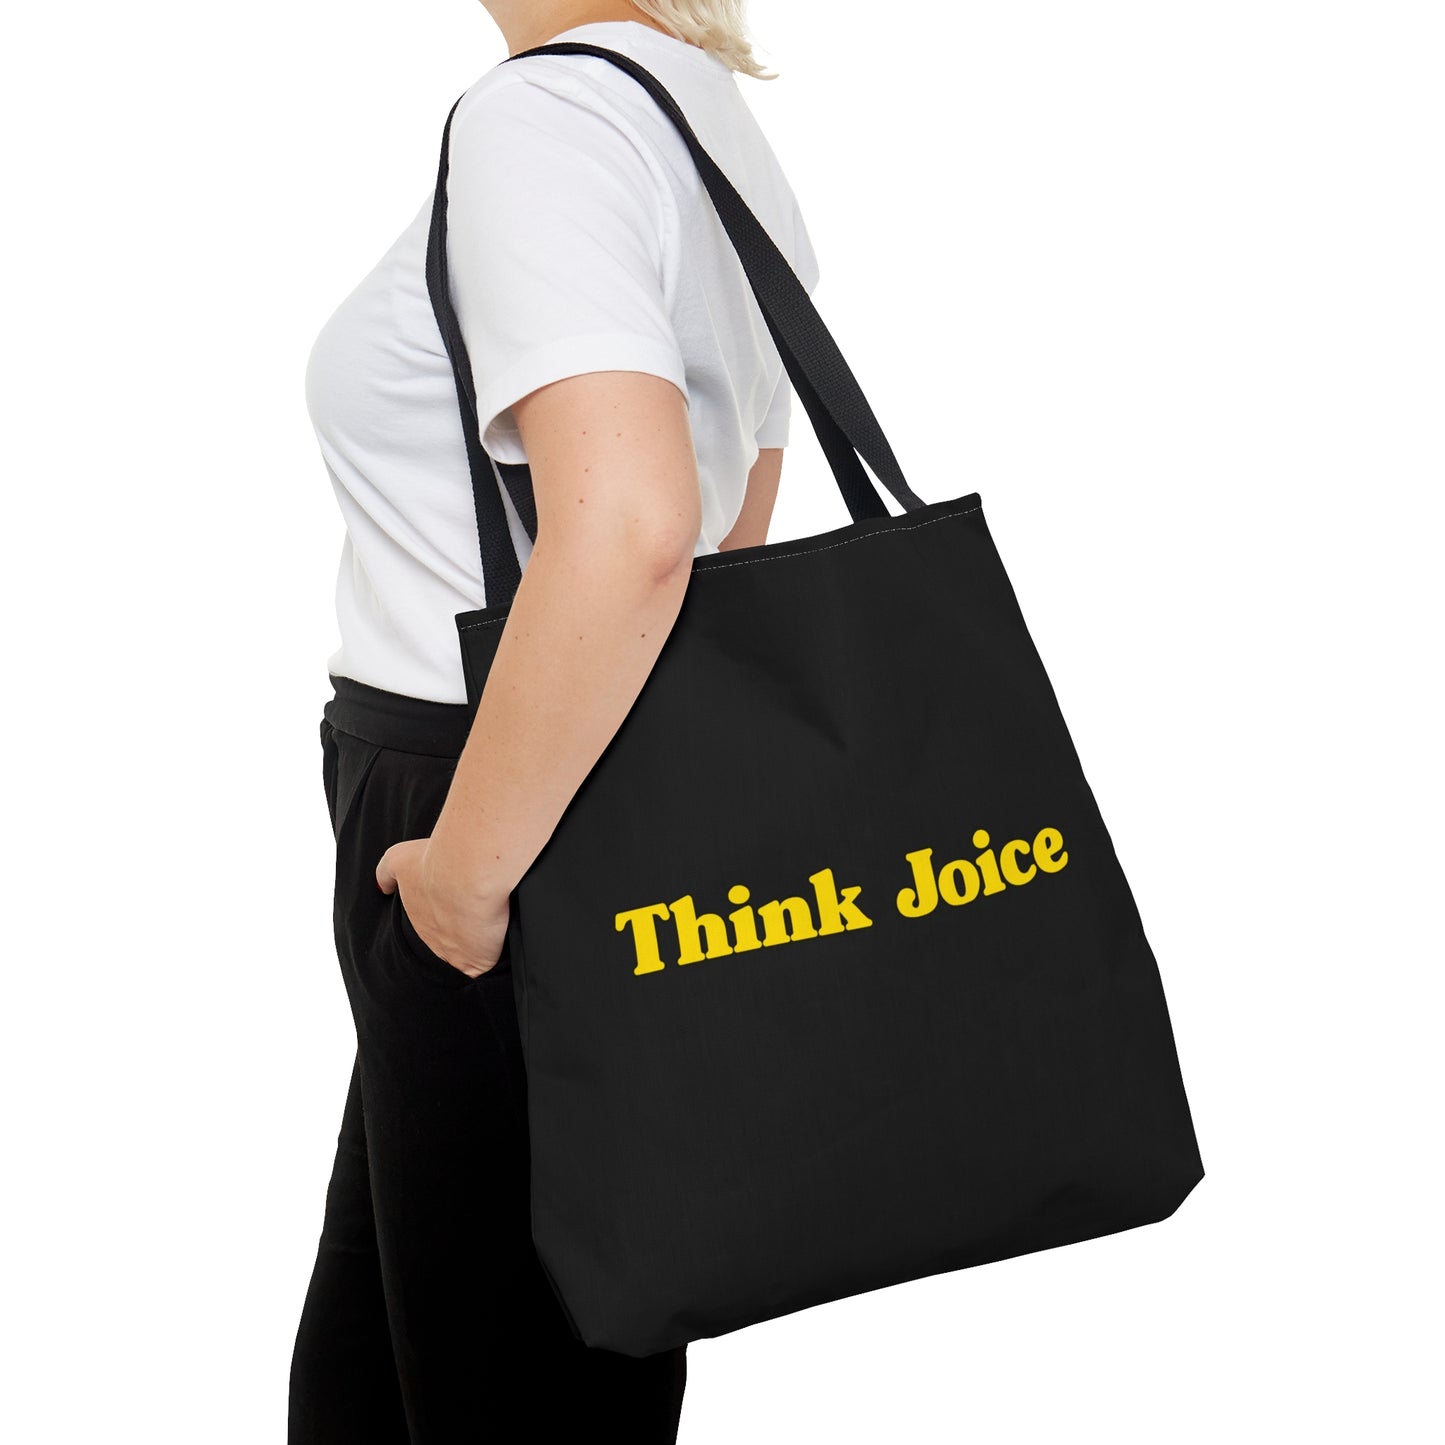 Think Joice Retro (yellow design) on Black Tote Bag